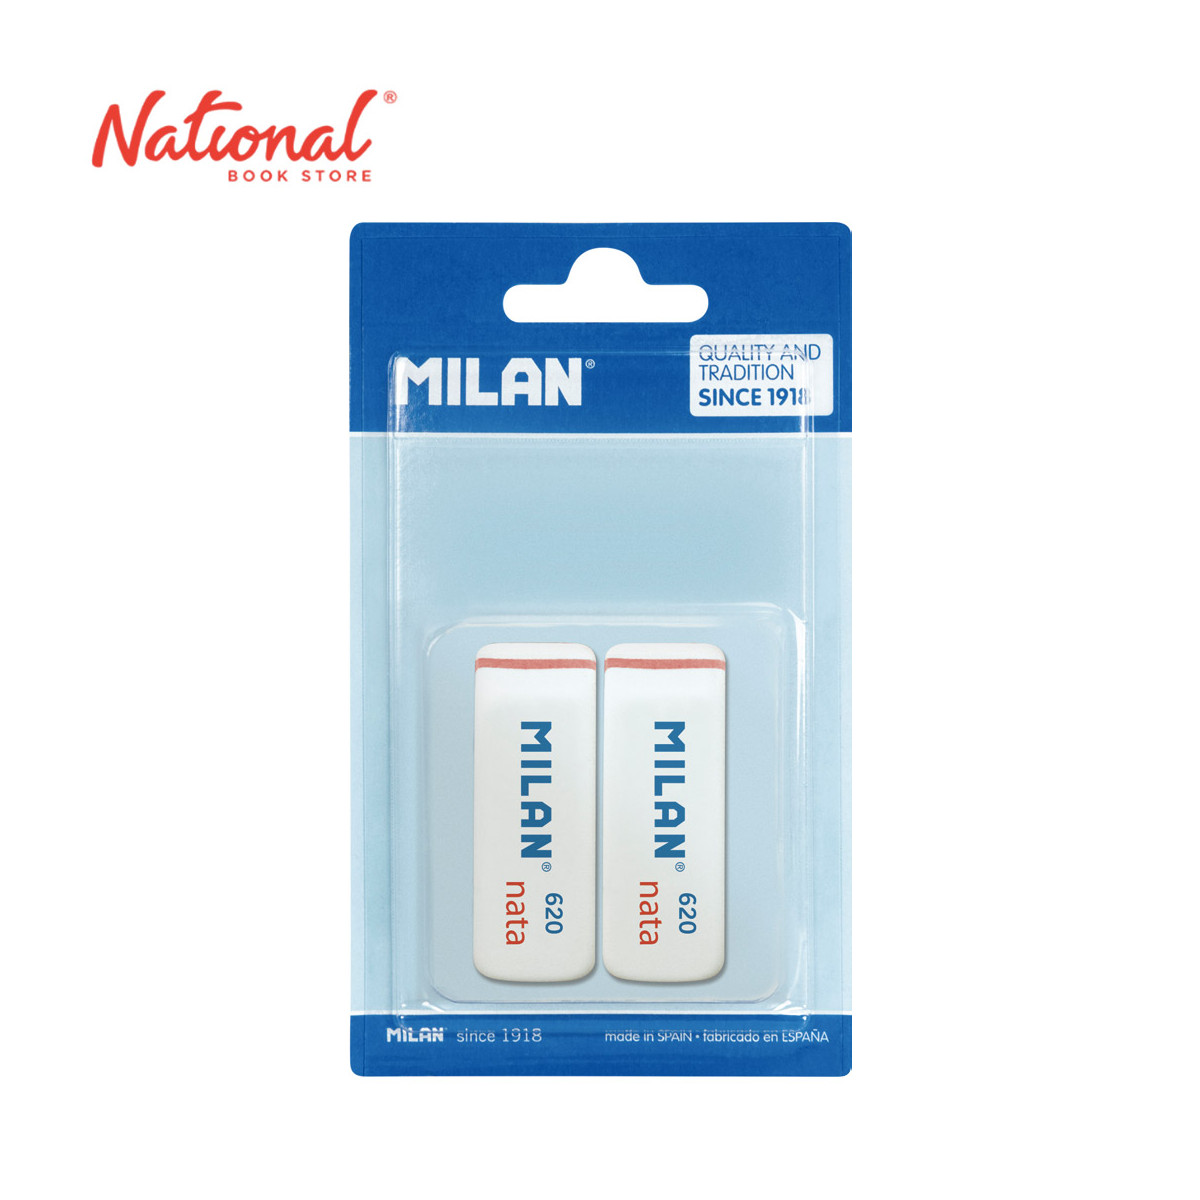 Milan Rubber Eraser Nata Bevelled White 620 2's BPM10044 - School & Office Stationery